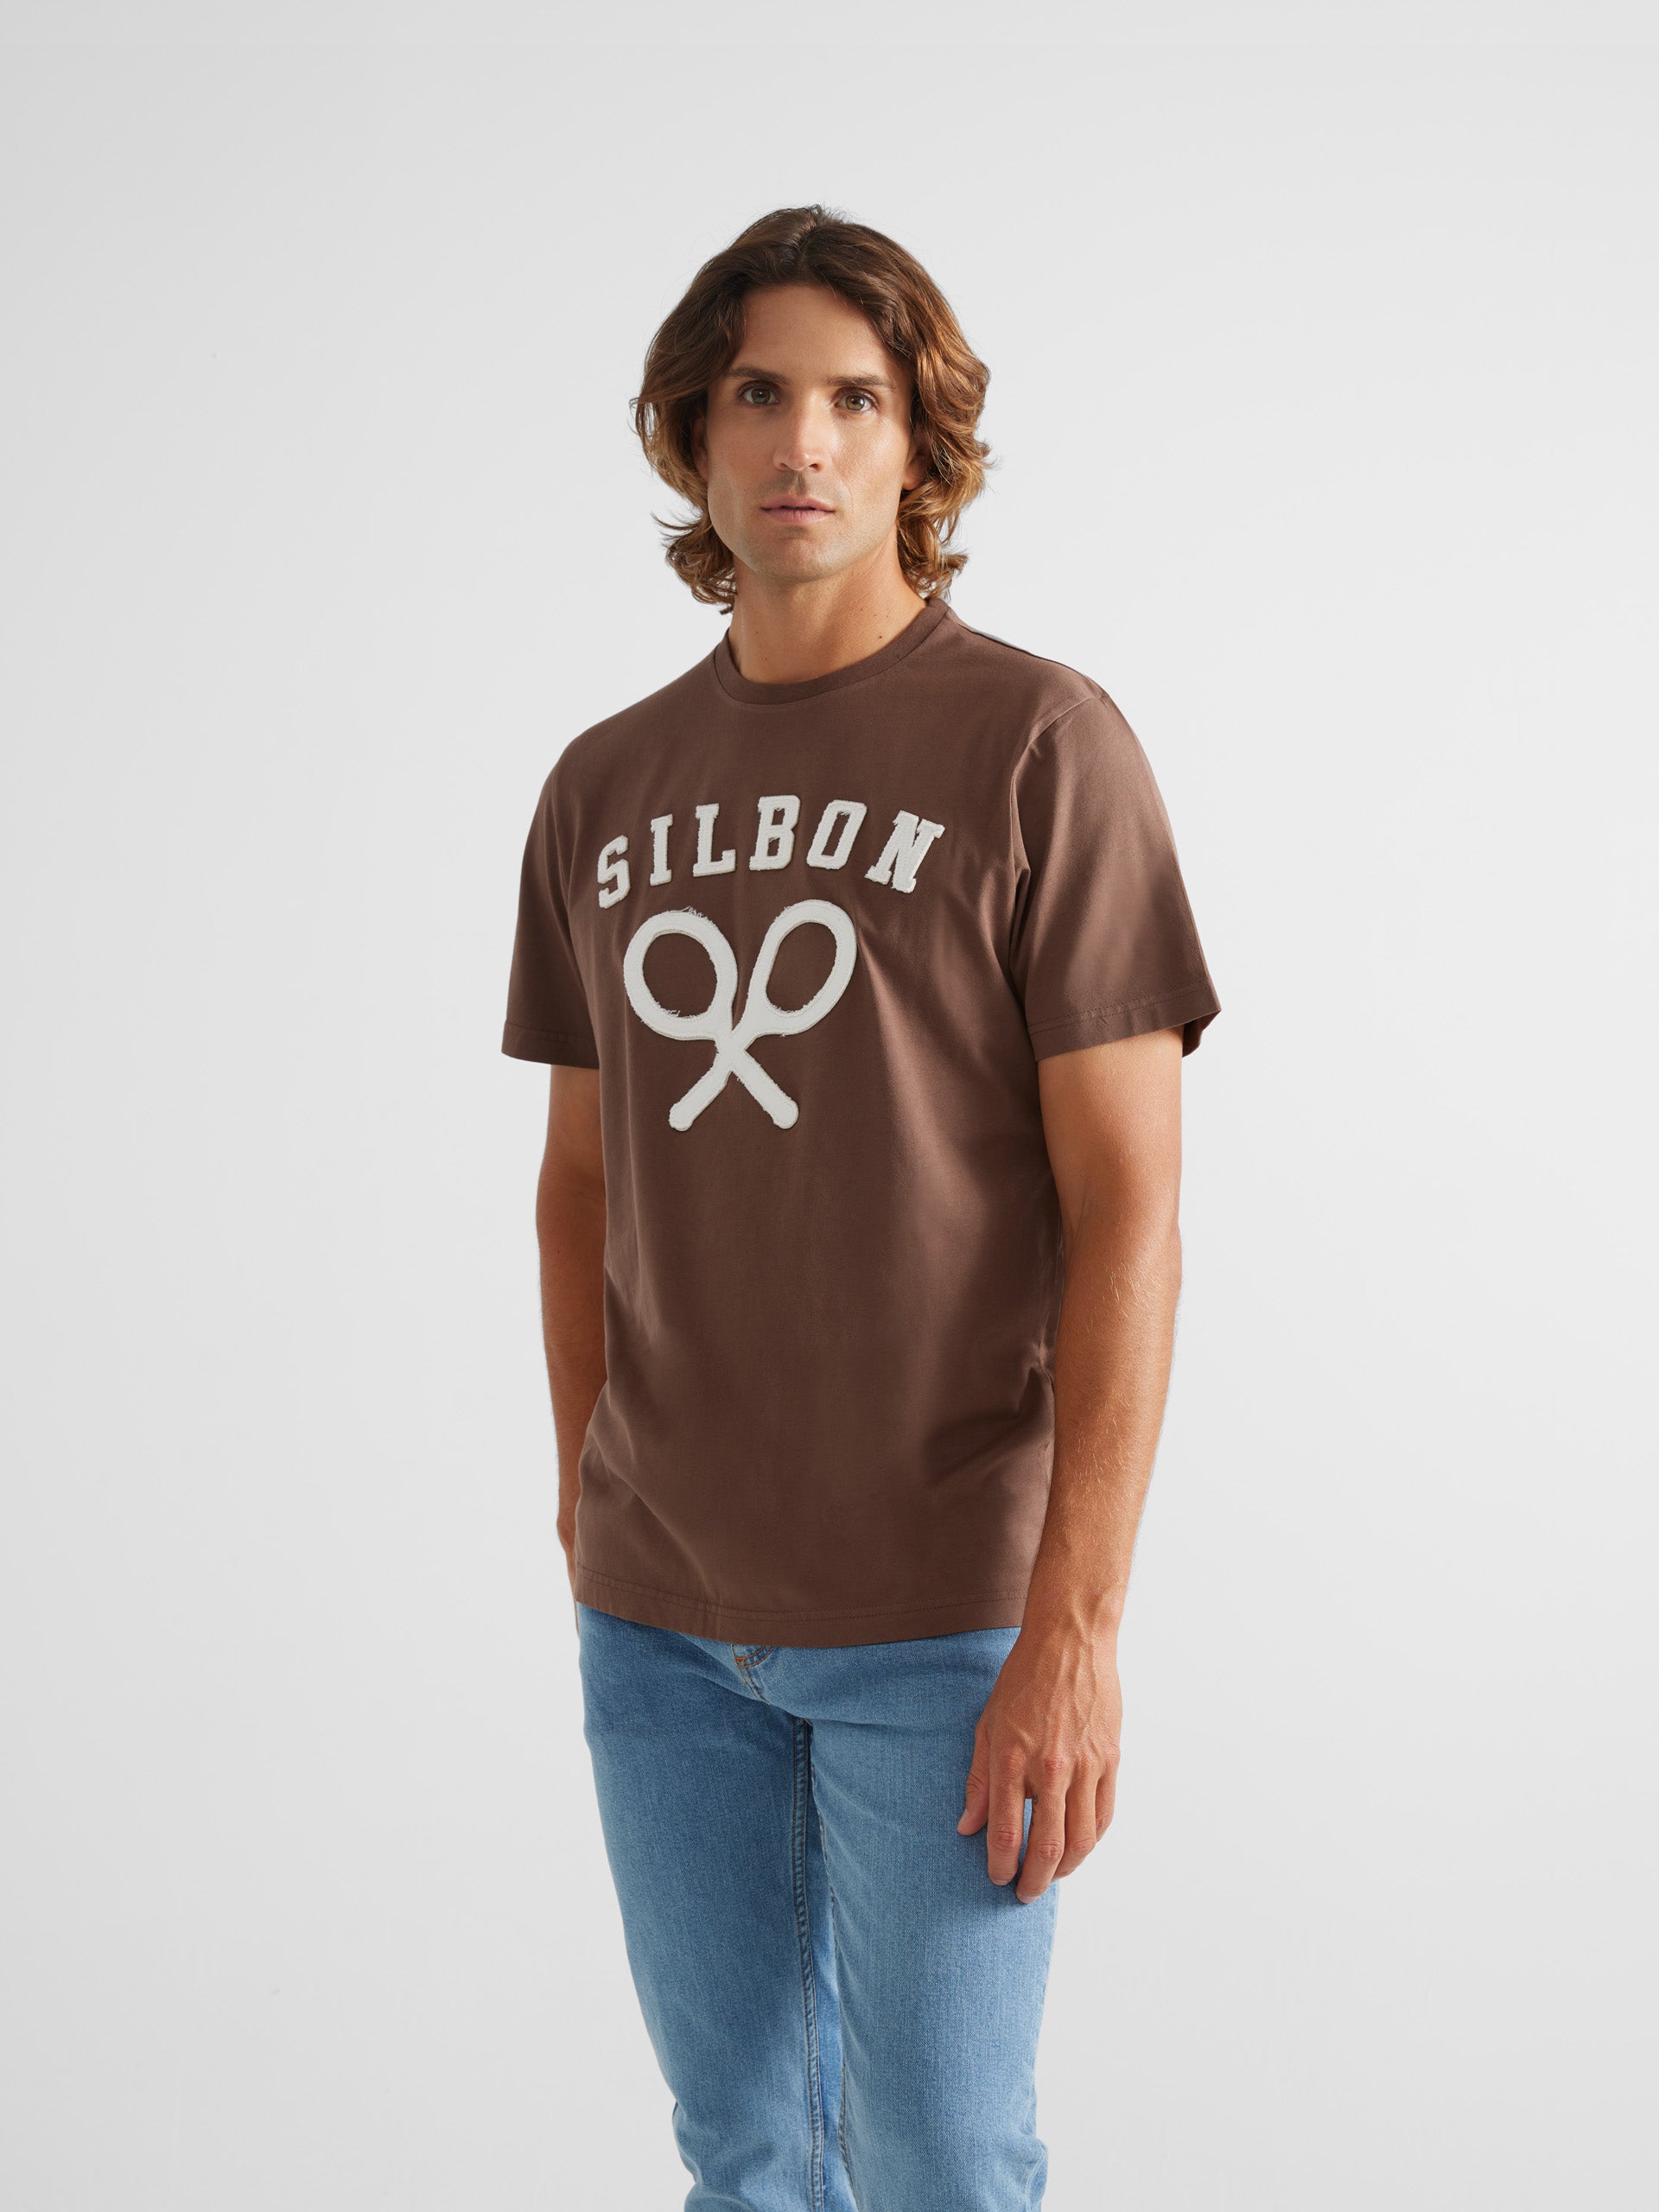 Camiseta raquetas corporativas marron